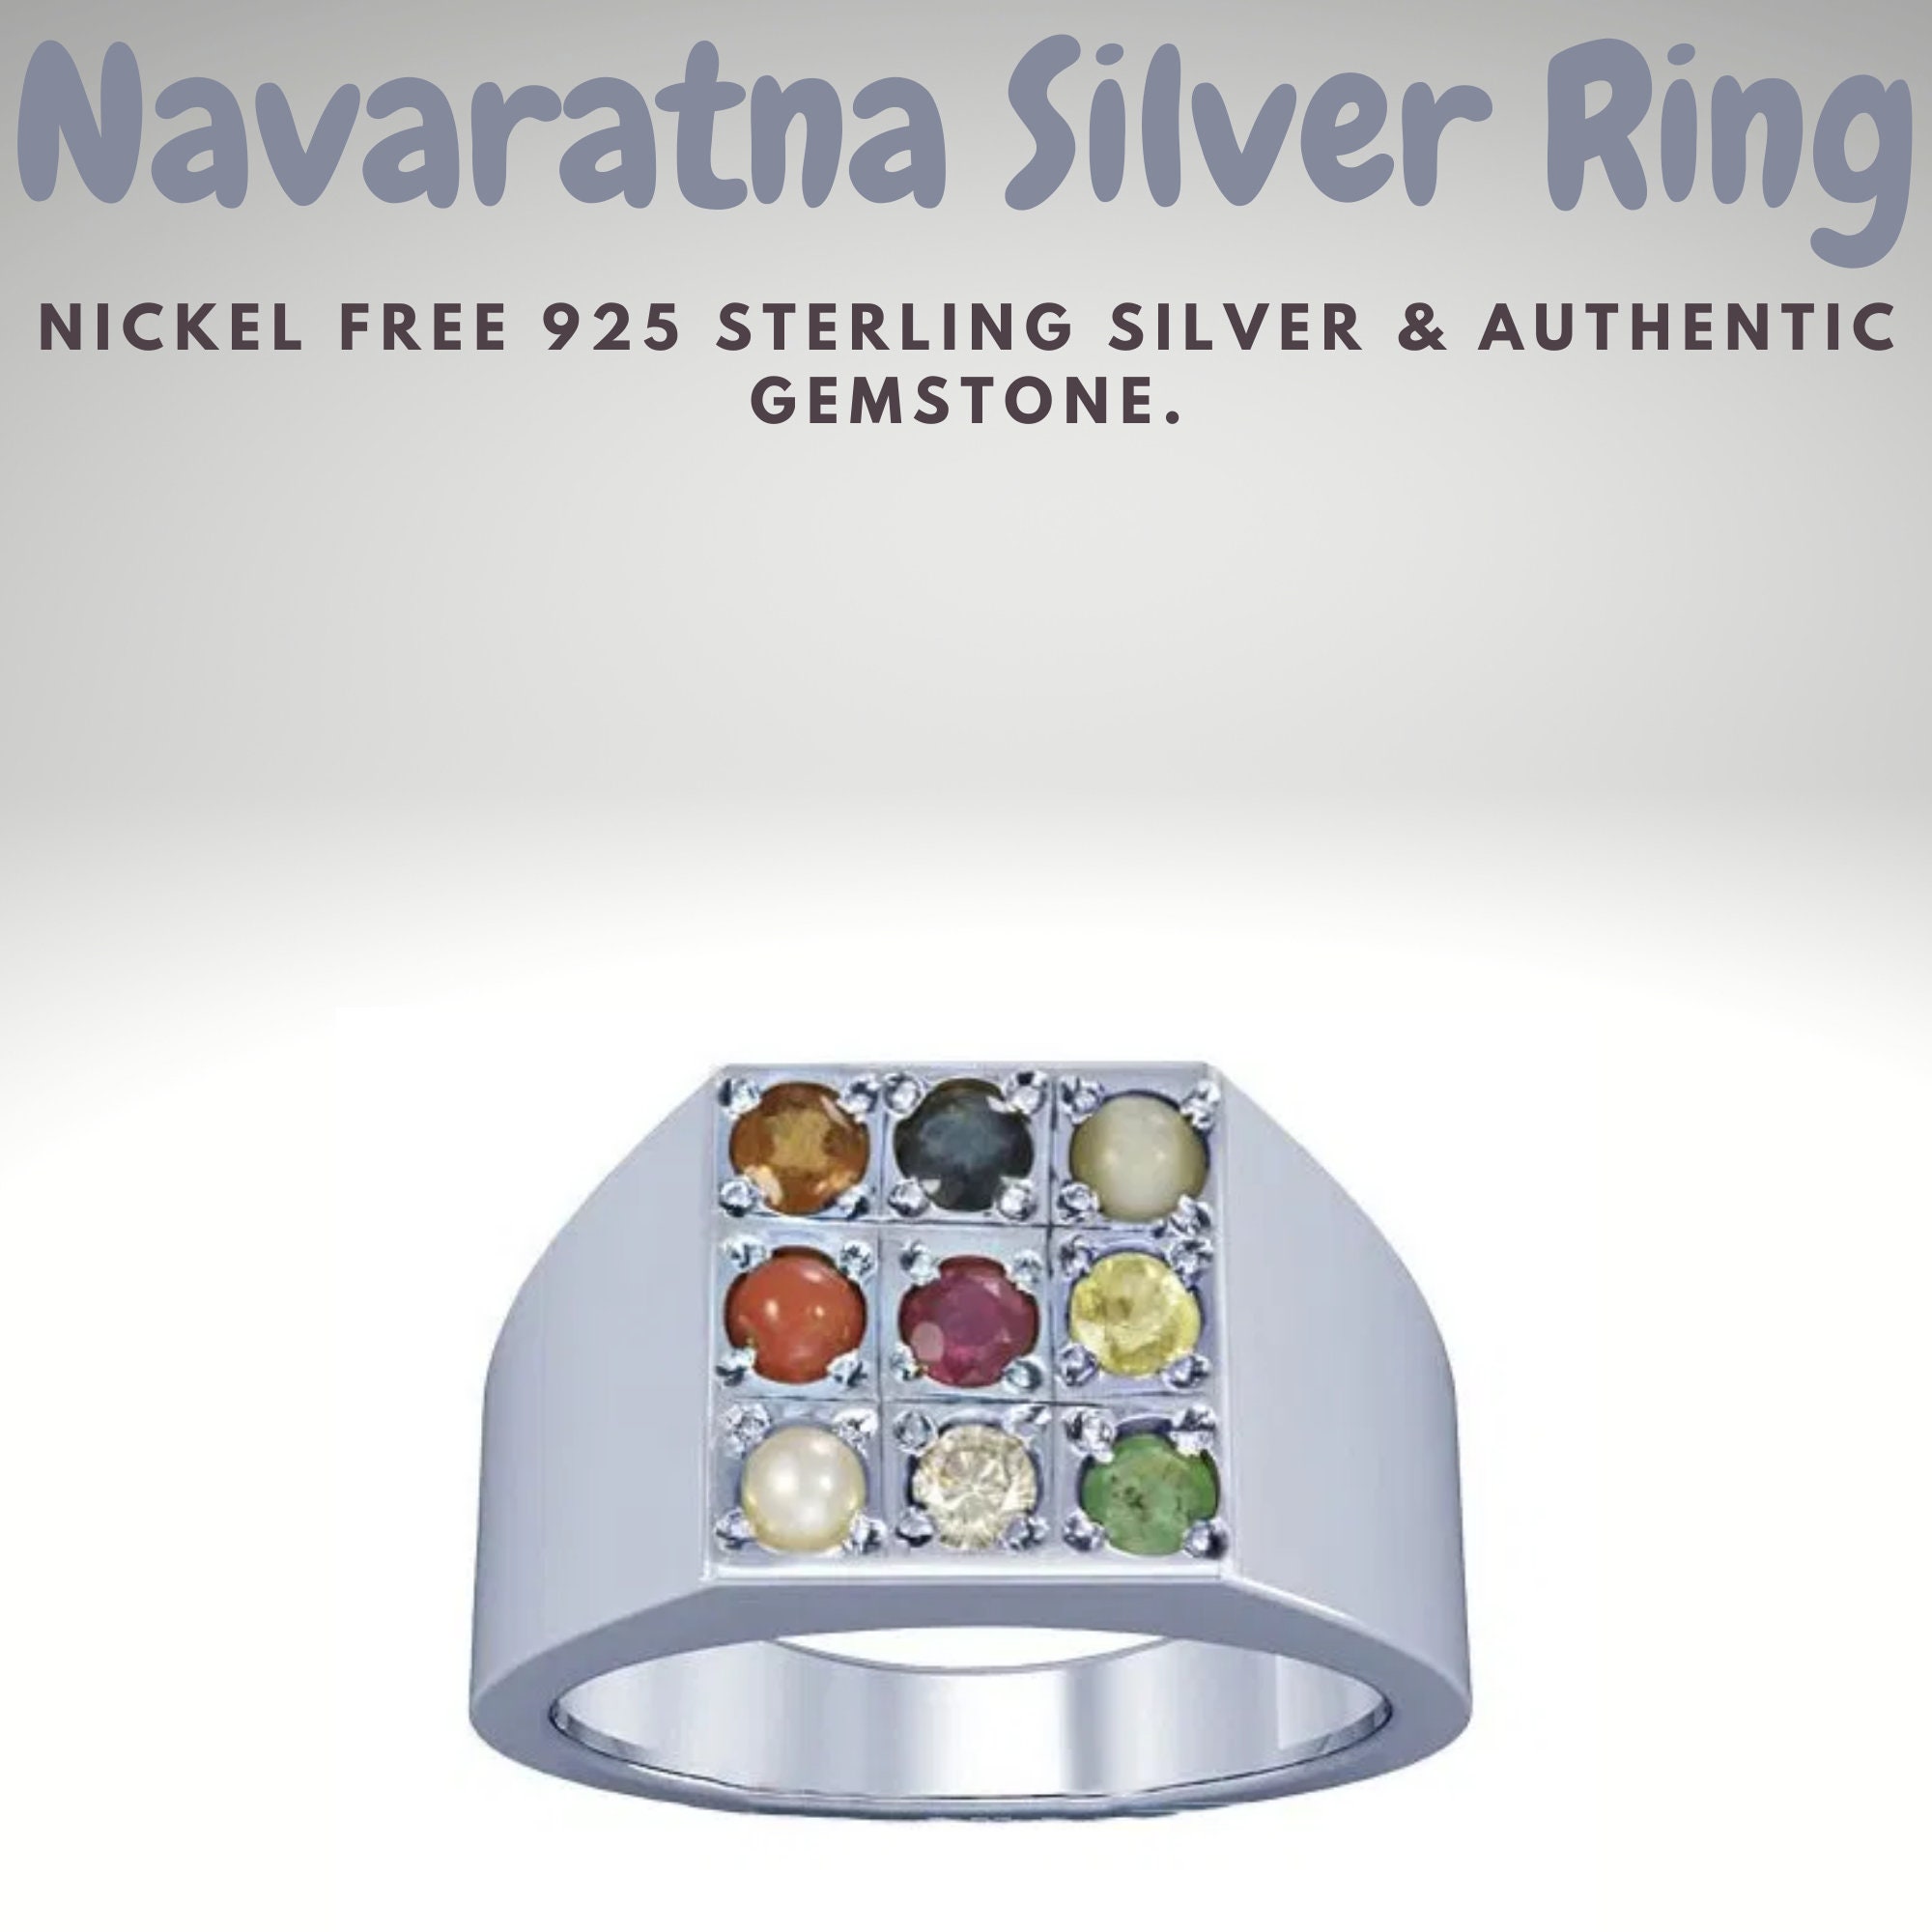 The complete Navaratna diamond jewellery guide